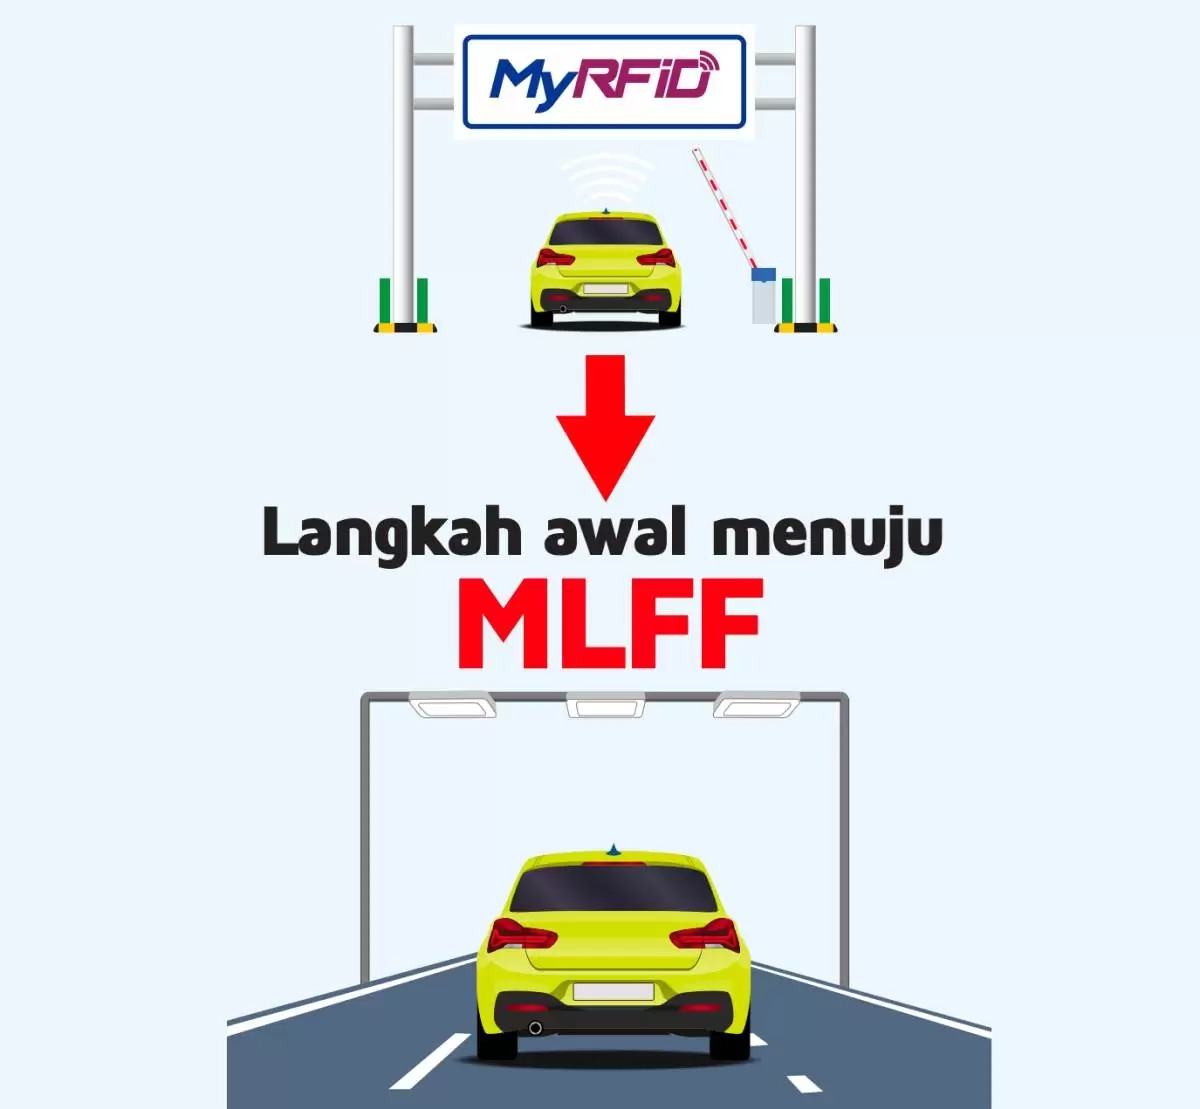 MLFF进展不顺！大道公司集体反对 政府直颁20年特许经营权 MLFF合约给予YTL机构关联“缺乏经验”的私人公司